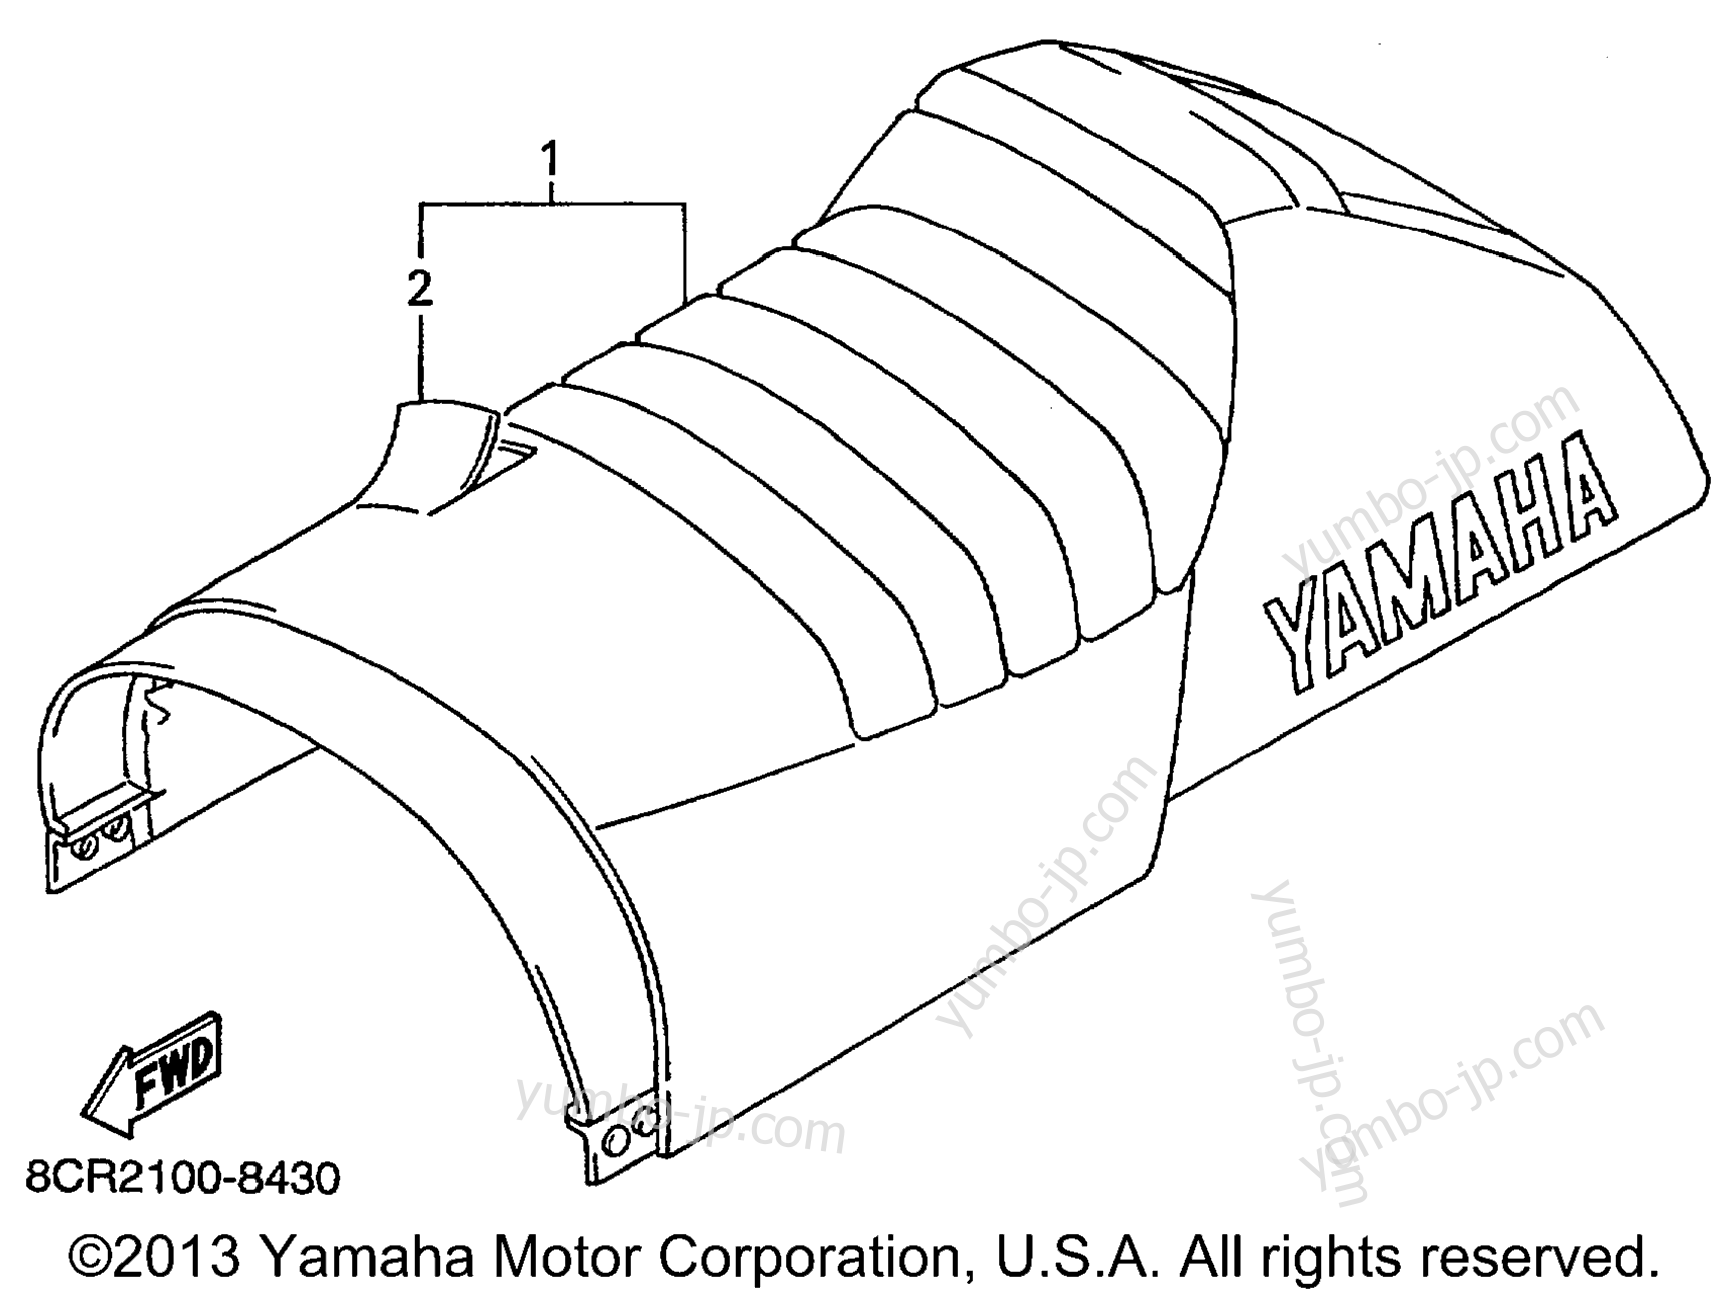 Alternate Single Seat for snowmobiles YAMAHA VMAX 600 XTR (ELEC START+REVERSE) (VX600XTRB) 1998 year